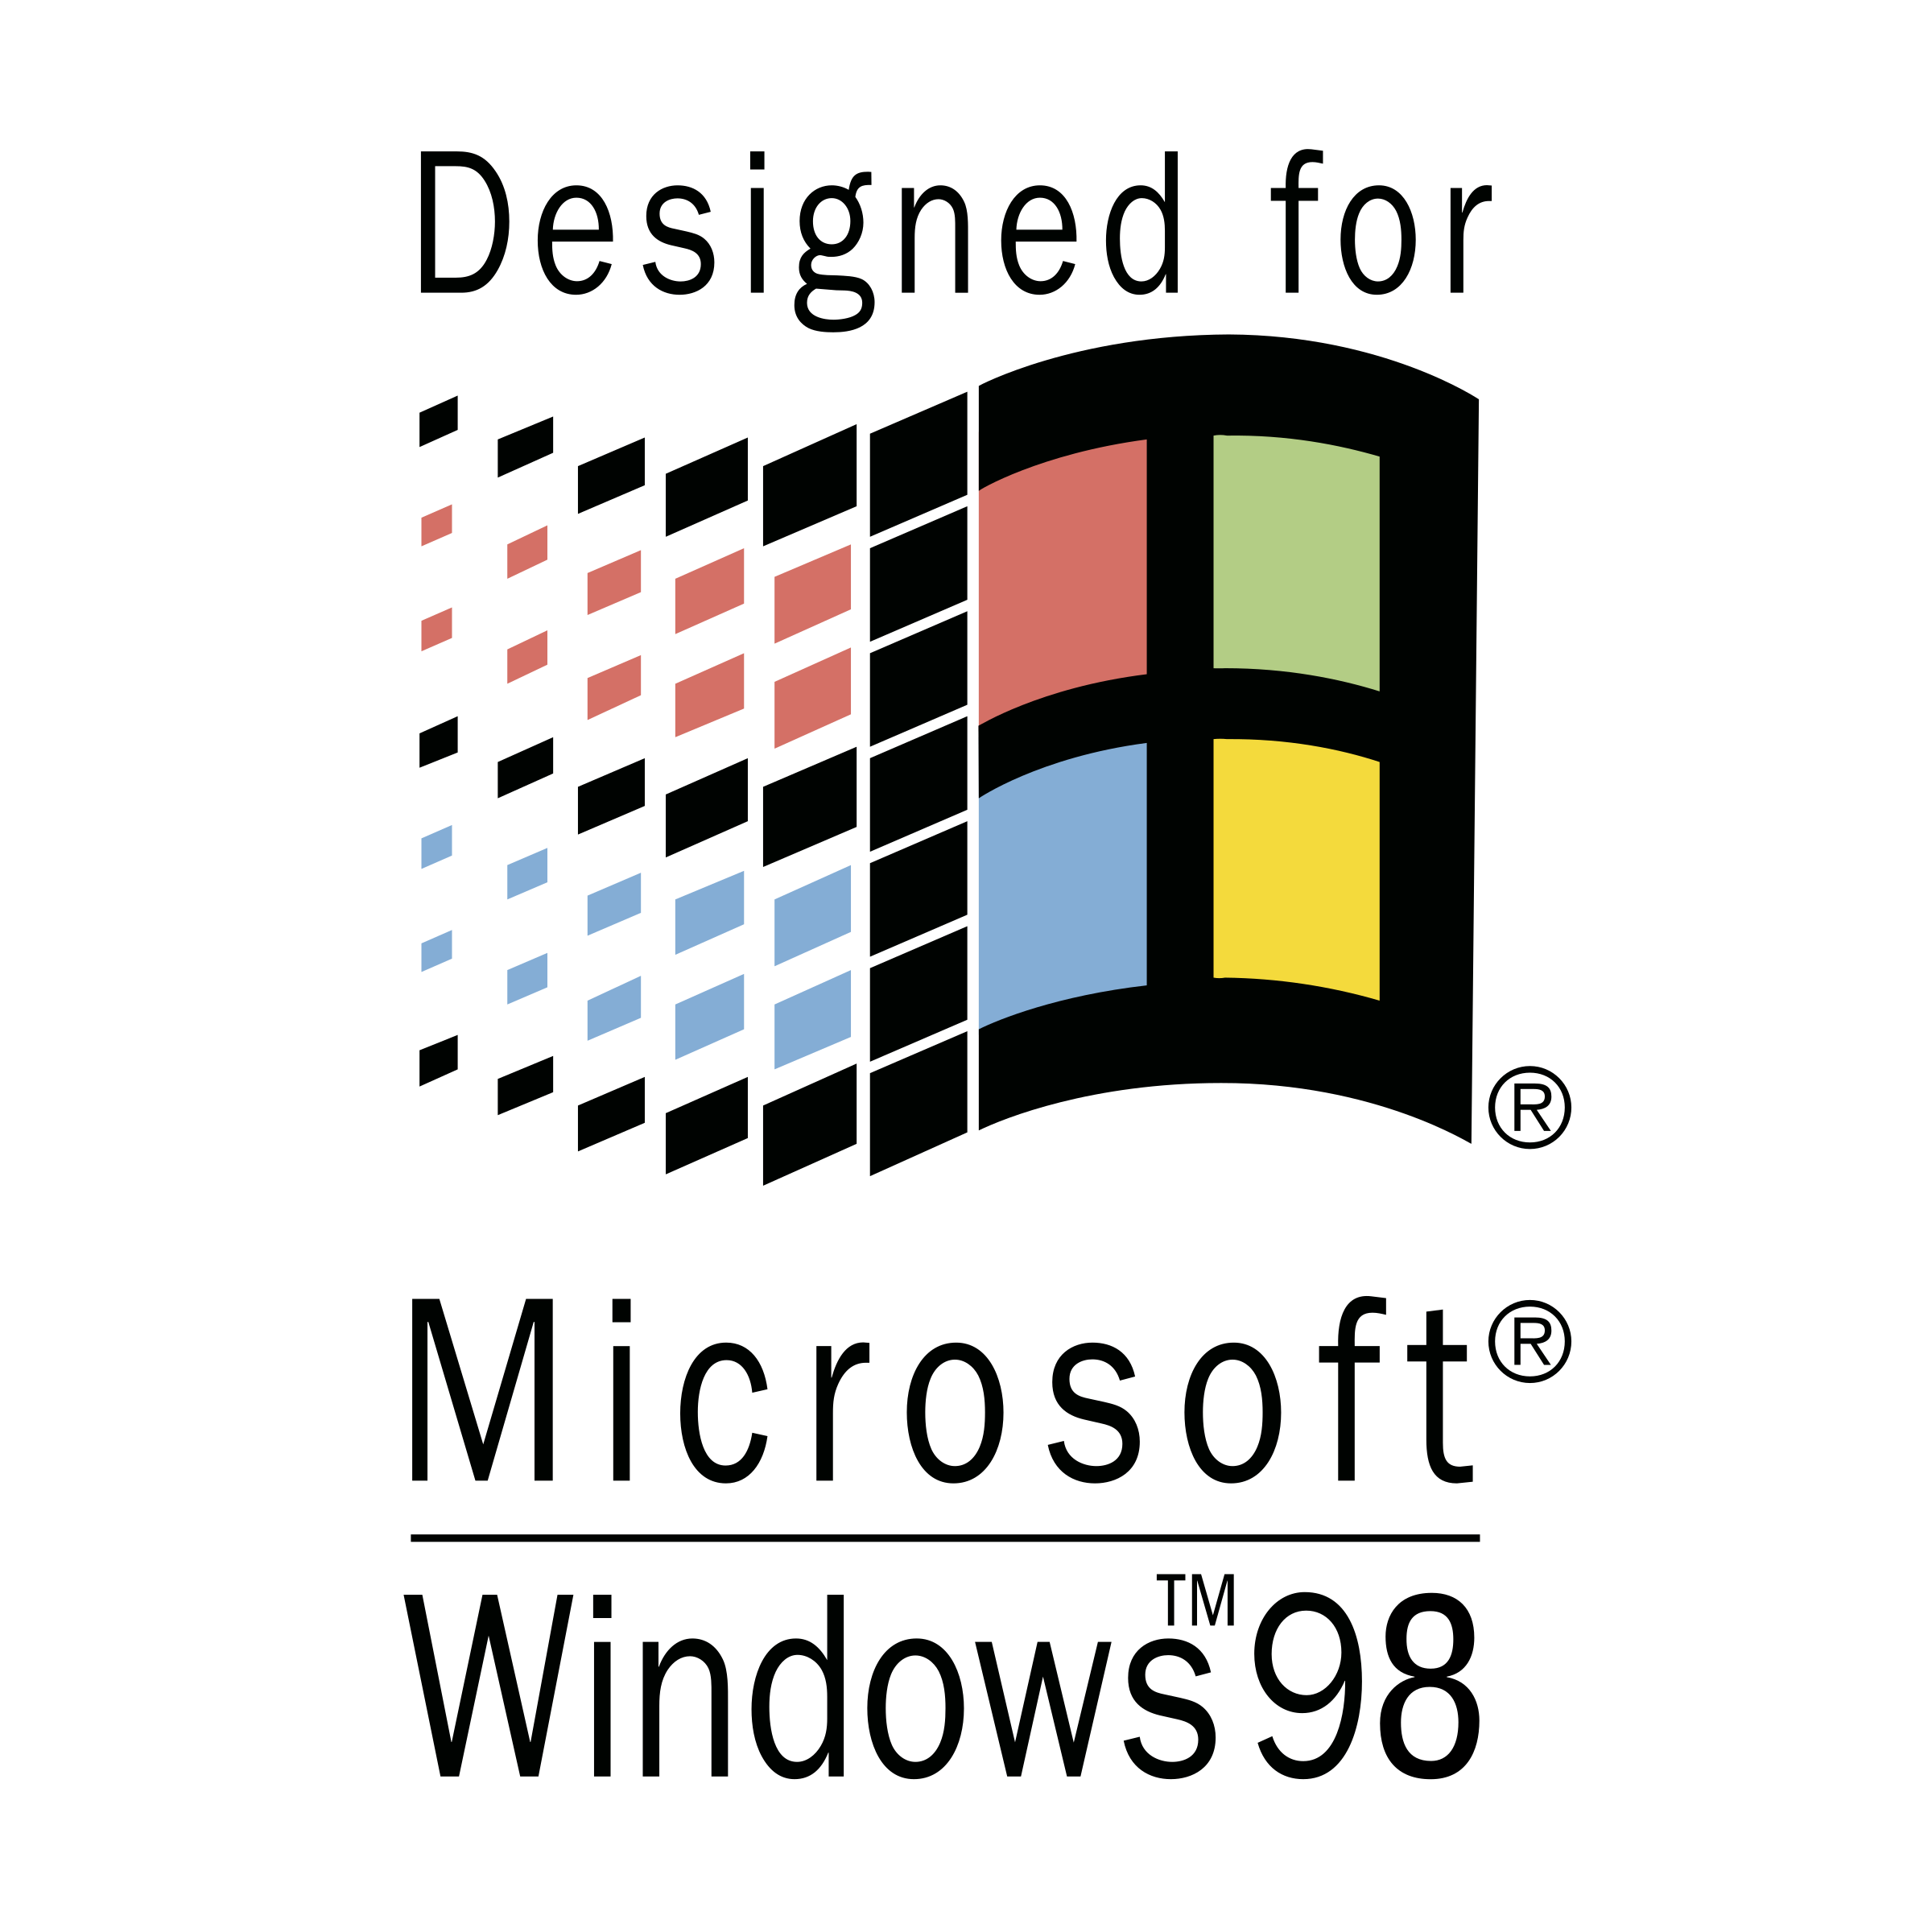 Designed for microsoft logo. Windows 98 png